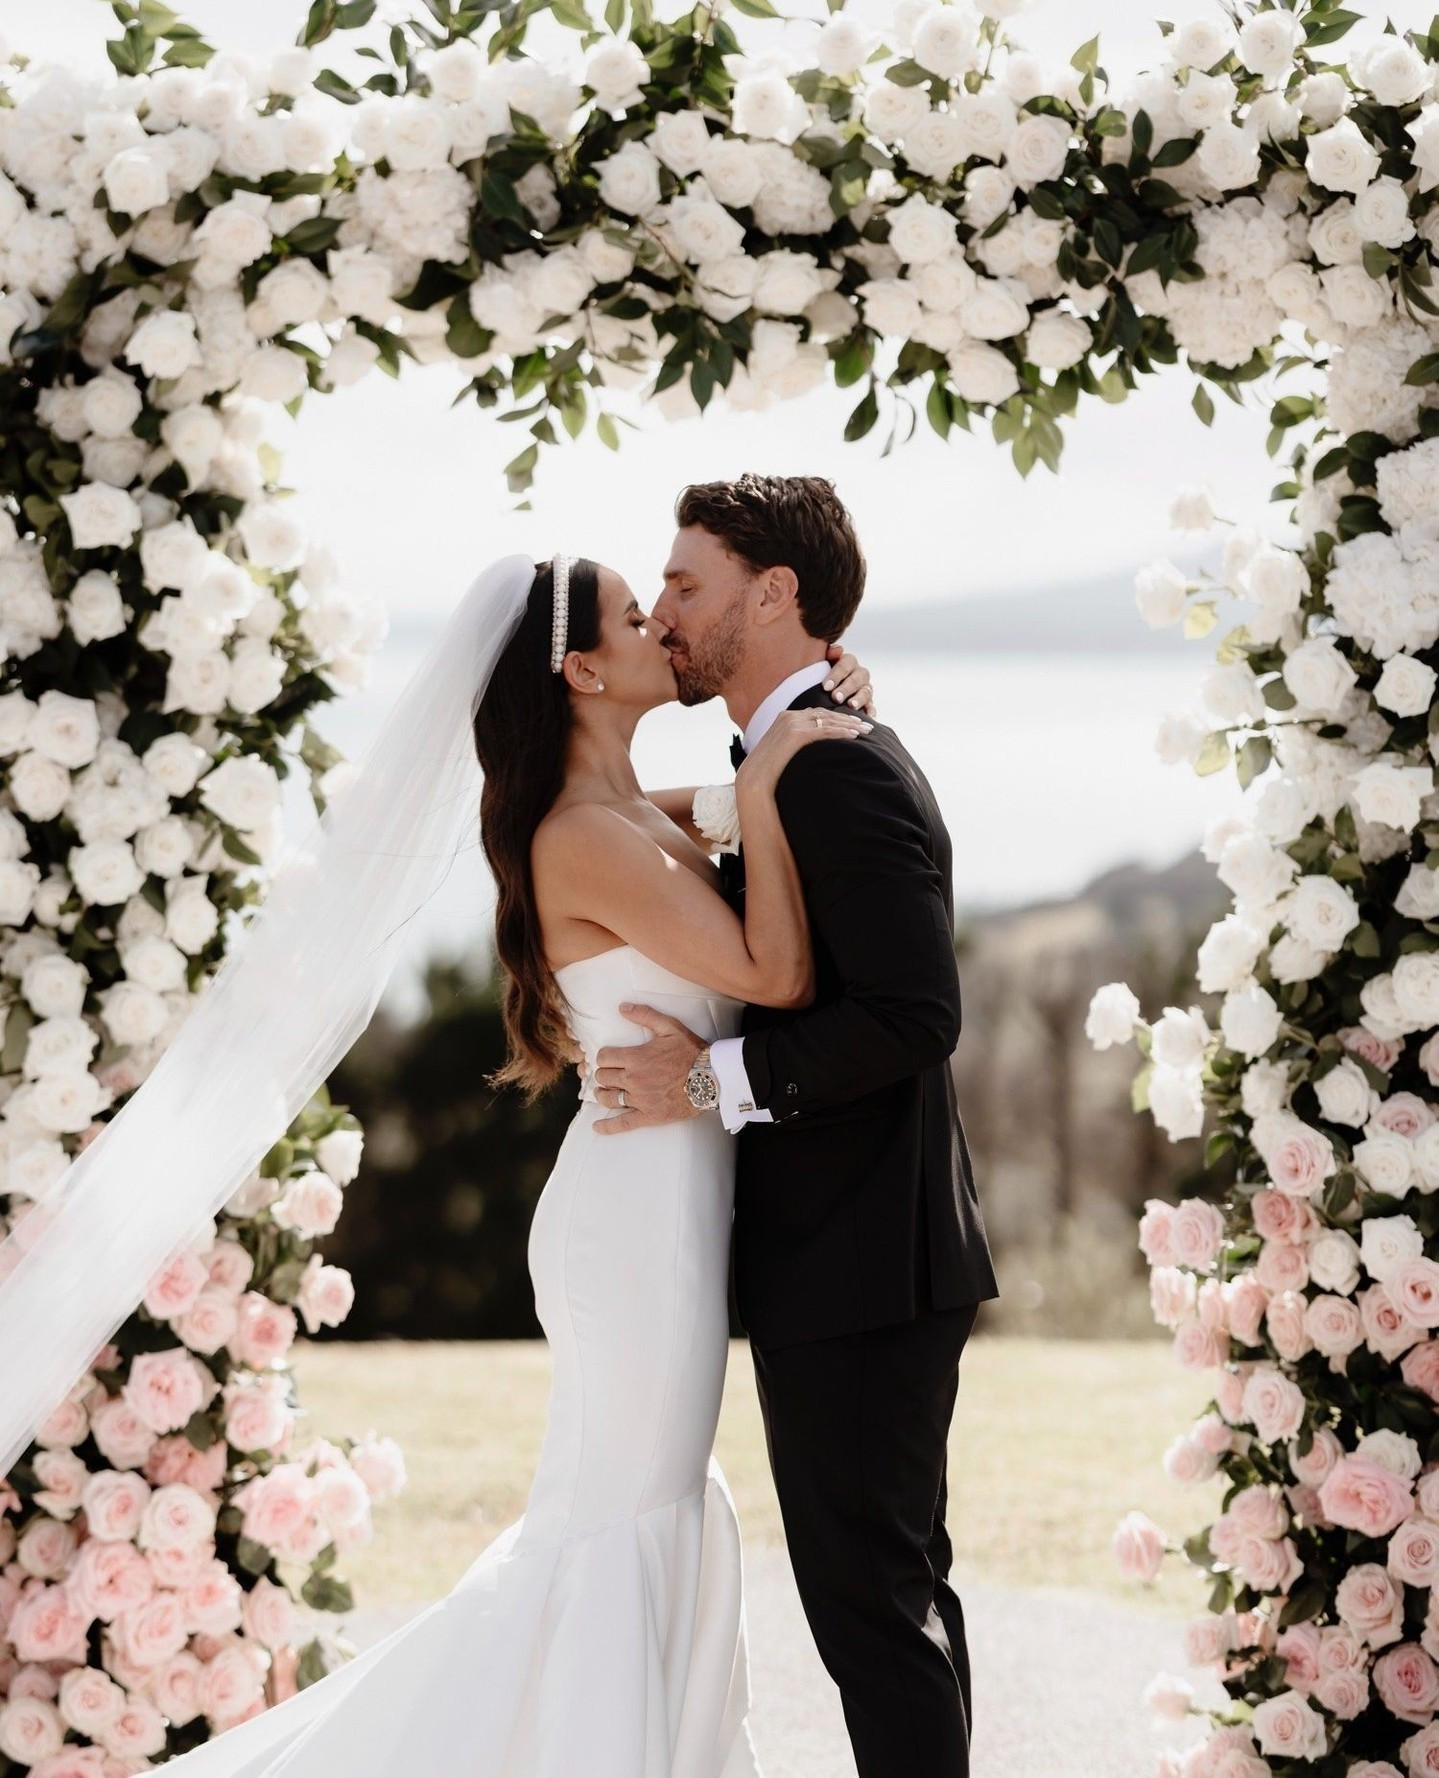 Top 20 New Zealand Wedding Photographers For Your Dream Destination Wedding